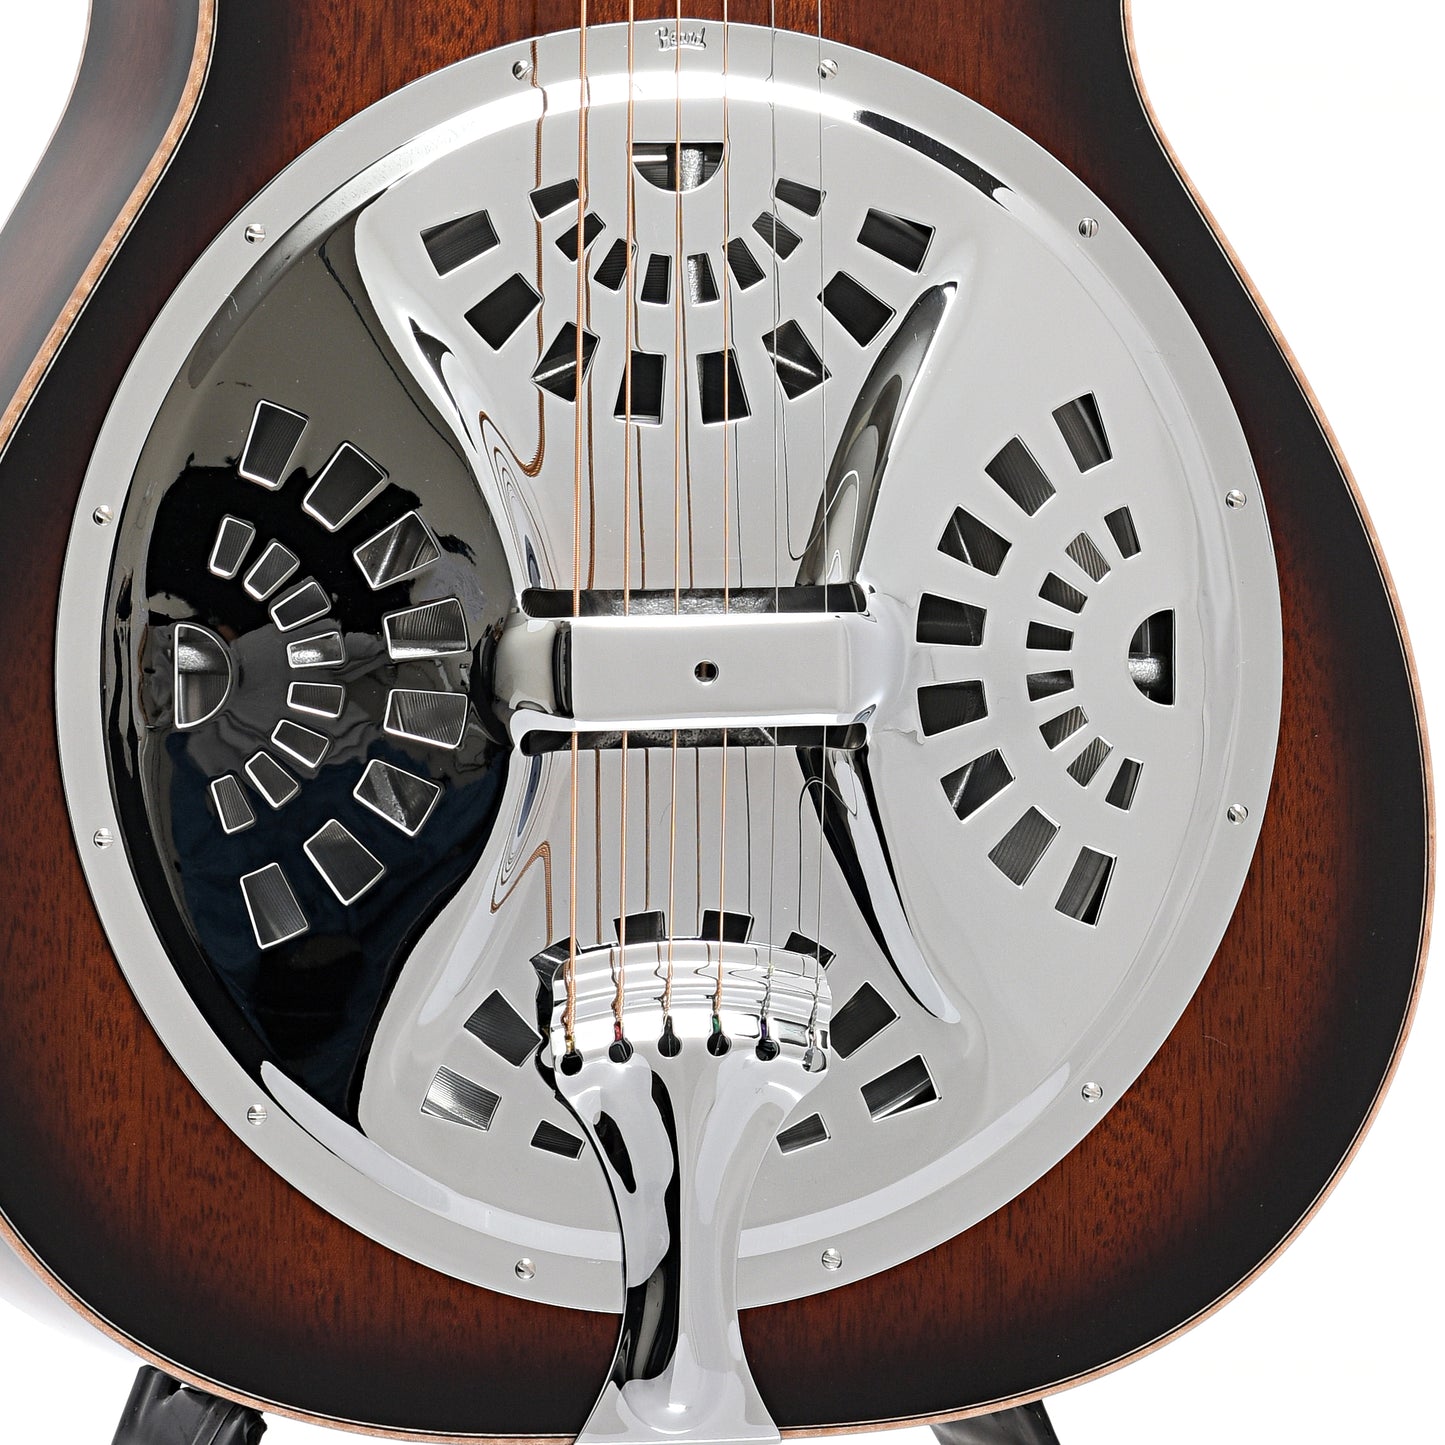 Resonator of Beard Standard R Model Squareneck Resonator Guitar with Fishman Nashville Pickup